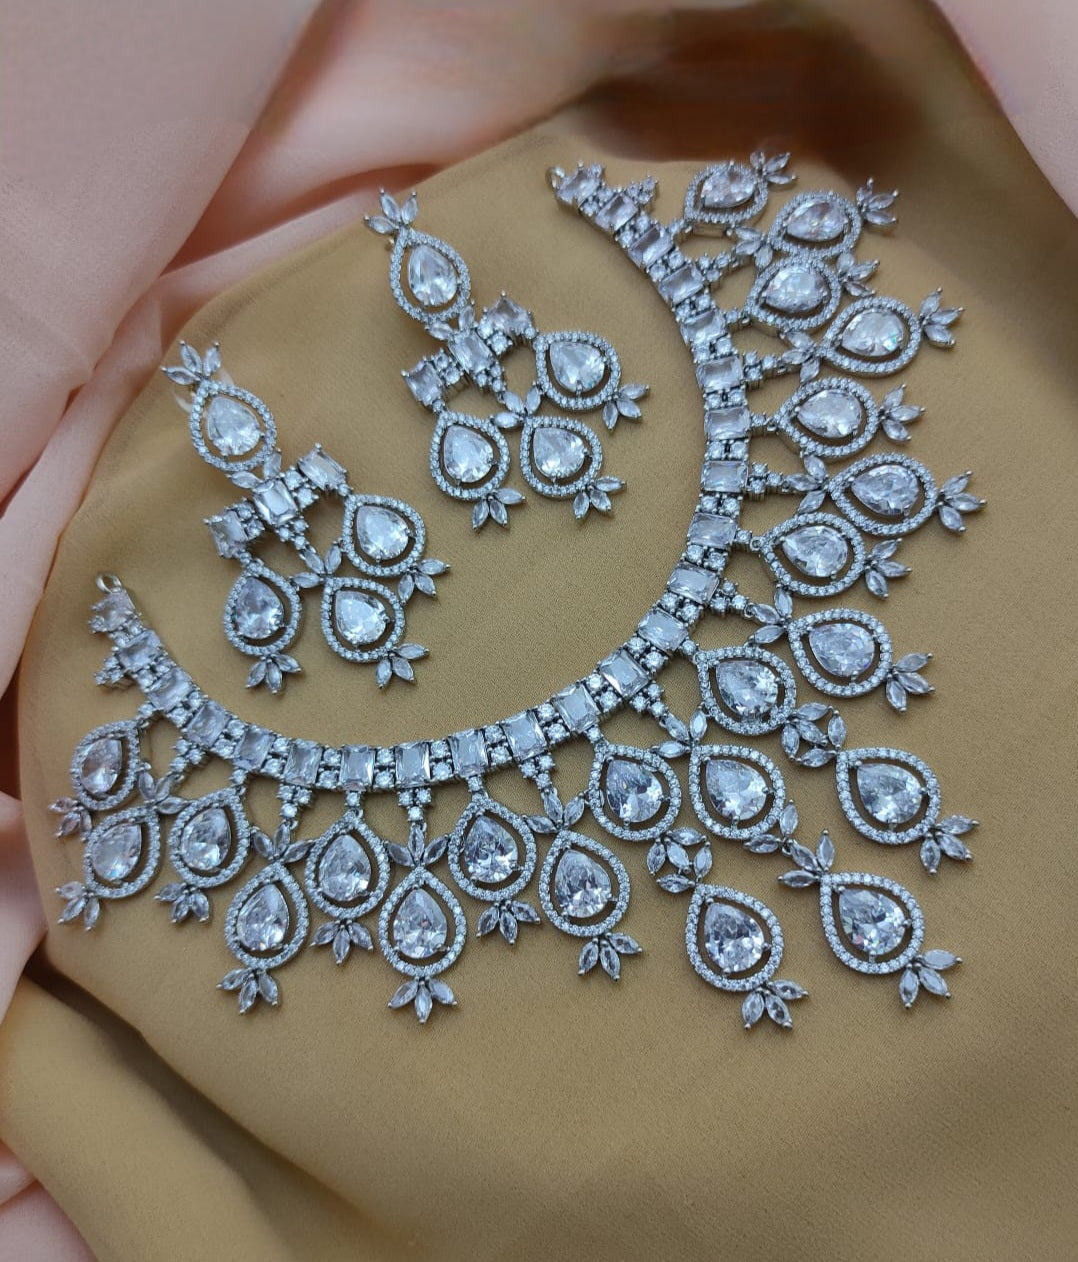 Silver American Diamond Necklace with White CZ Tear Drop stones|Indian Jewelry|Pakistani Wedding choker|Bollywood fashion|Punjabi Wedding jewelry|Indian Bride USA